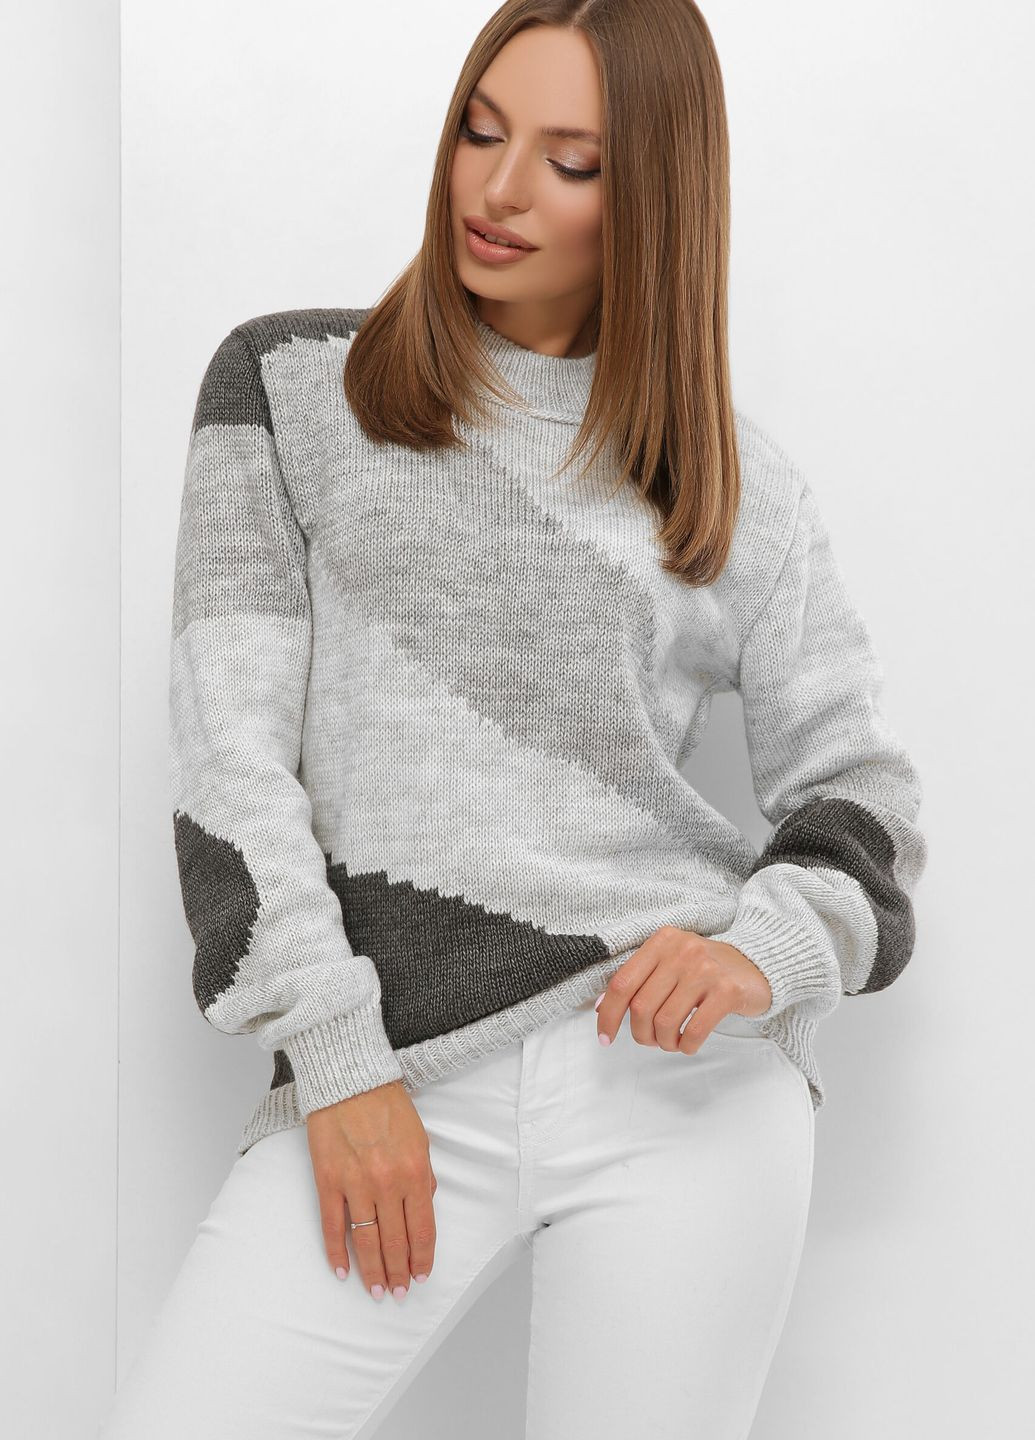 Светло-серый свитер 207 светло-серый MarSe